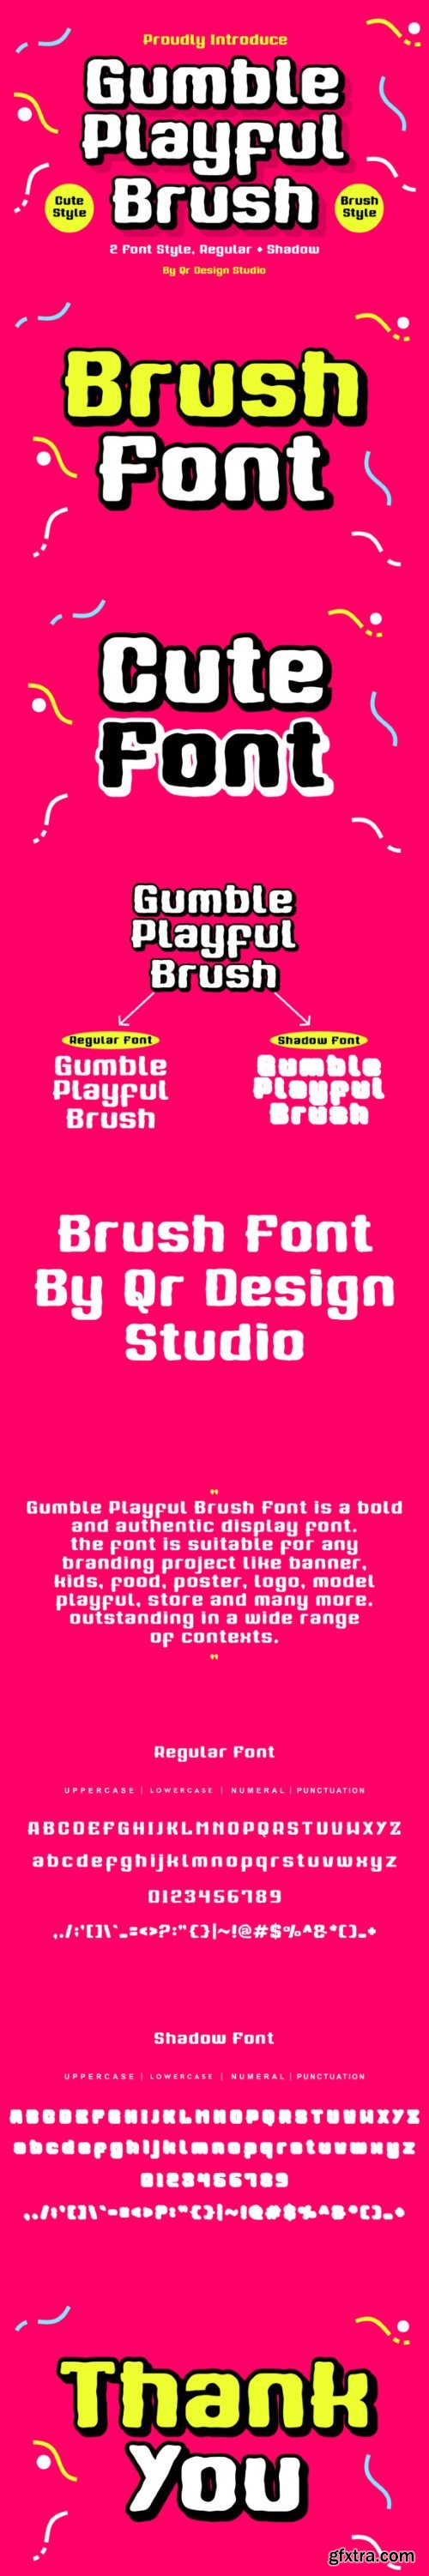 Gumble Playful Brush Font